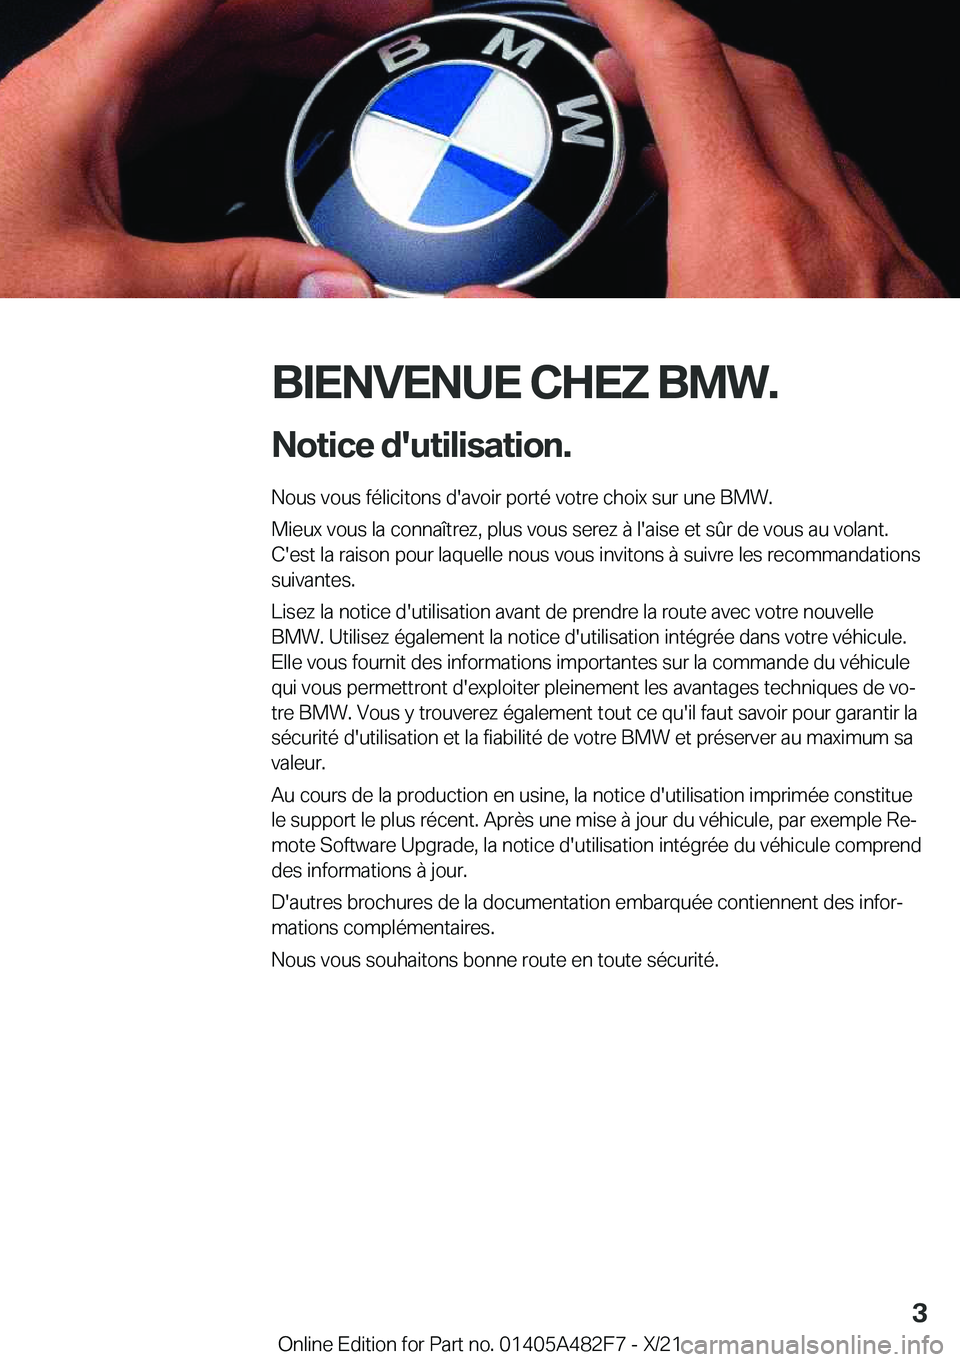 BMW X3 2022  Notices Demploi (in French) �B�I�E�N�V�E�N�U�E��C�H�E�Z��B�M�W�.�N�o�t�i�c�e��d�'�u�t�i�l�i�s�a�t�i�o�n�.
�N�o�u�s��v�o�u�s��f�é�l�i�c�i�t�o�n�s��d�'�a�v�o�i�r��p�o�r�t�é��v�o�t�r�e��c�h�o�i�x��s�u�r��u�n�e�